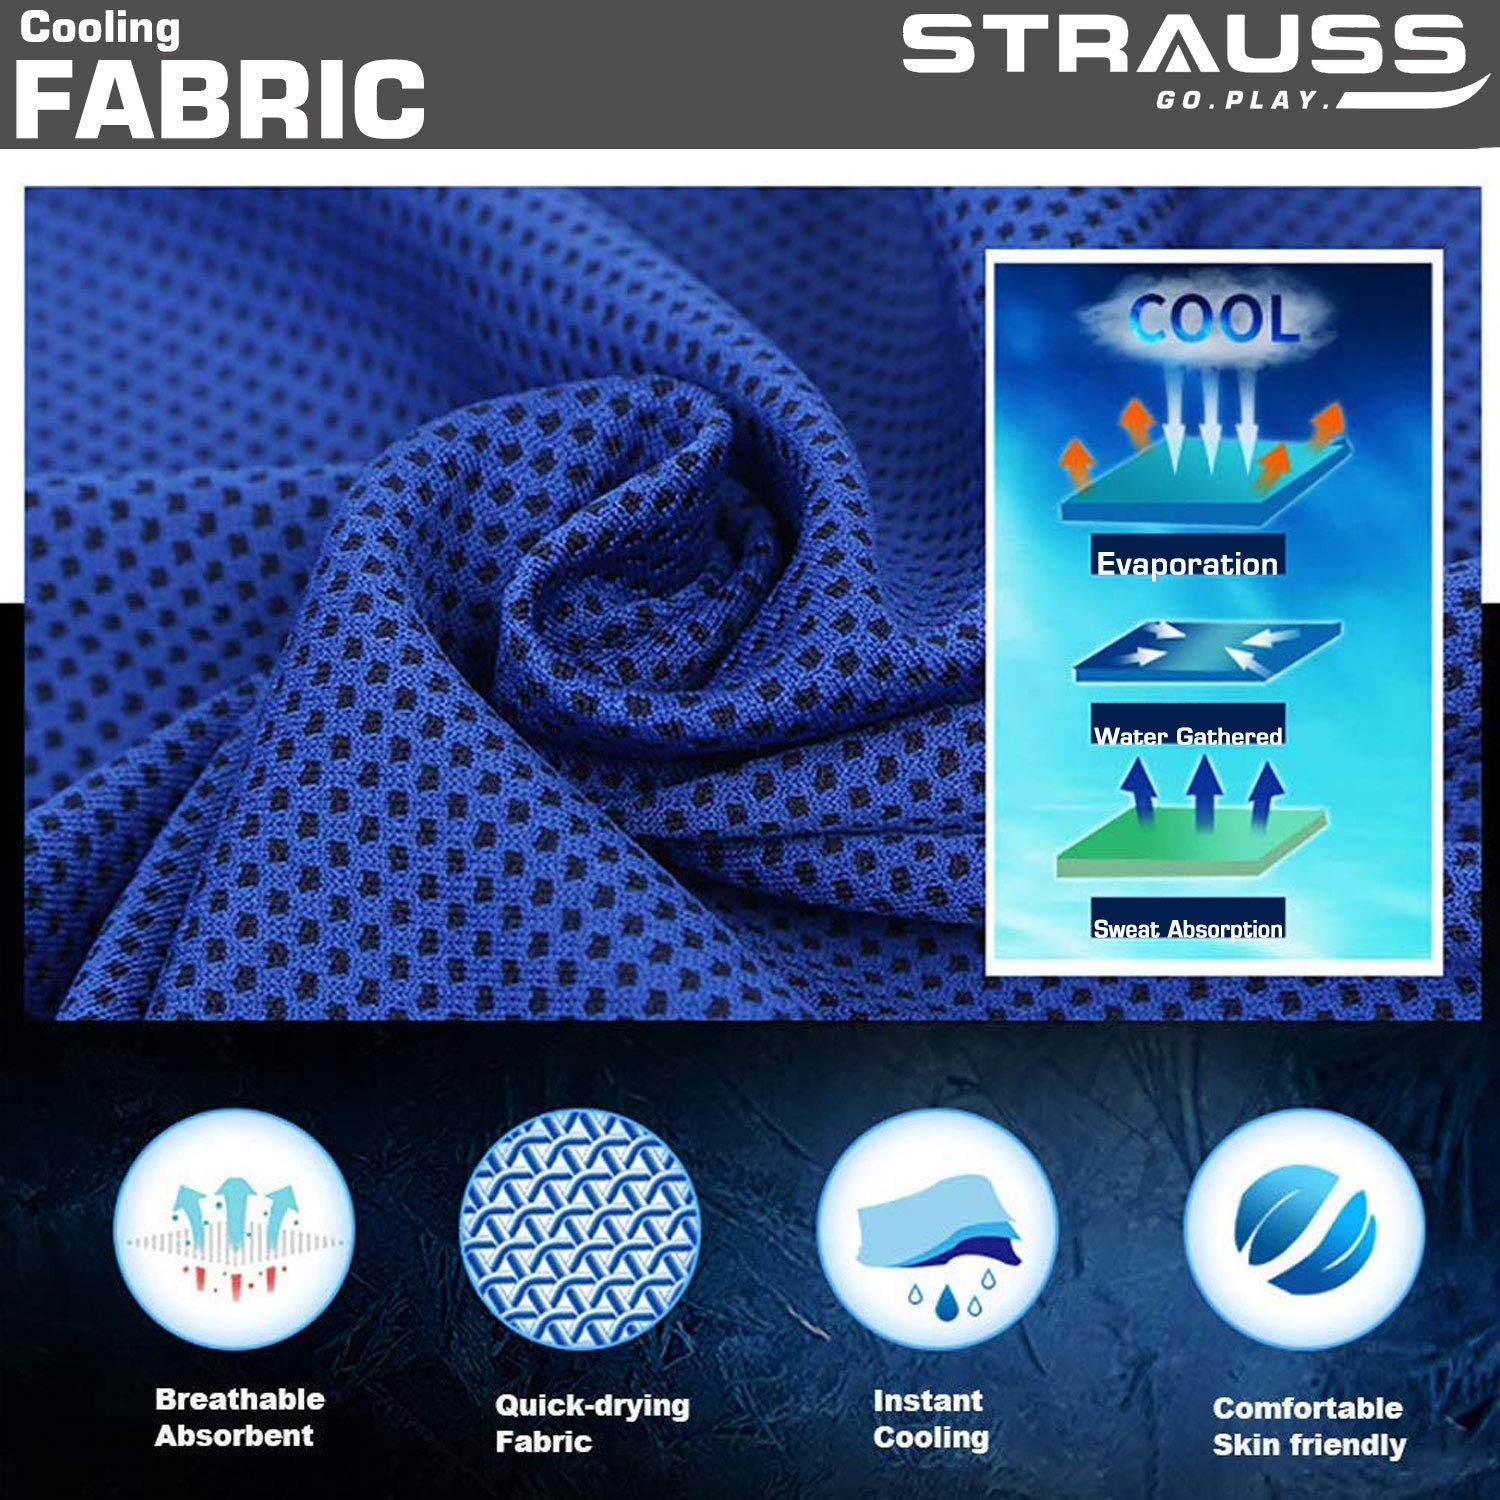 Strauss Eco-Friendly Single Texture TPE Yoga Mat 6 mm (Blue), Yoga Block (Purple) Pair, Anti-Slip Yoga Towel (Blue) and Yoga Belt (Blue)